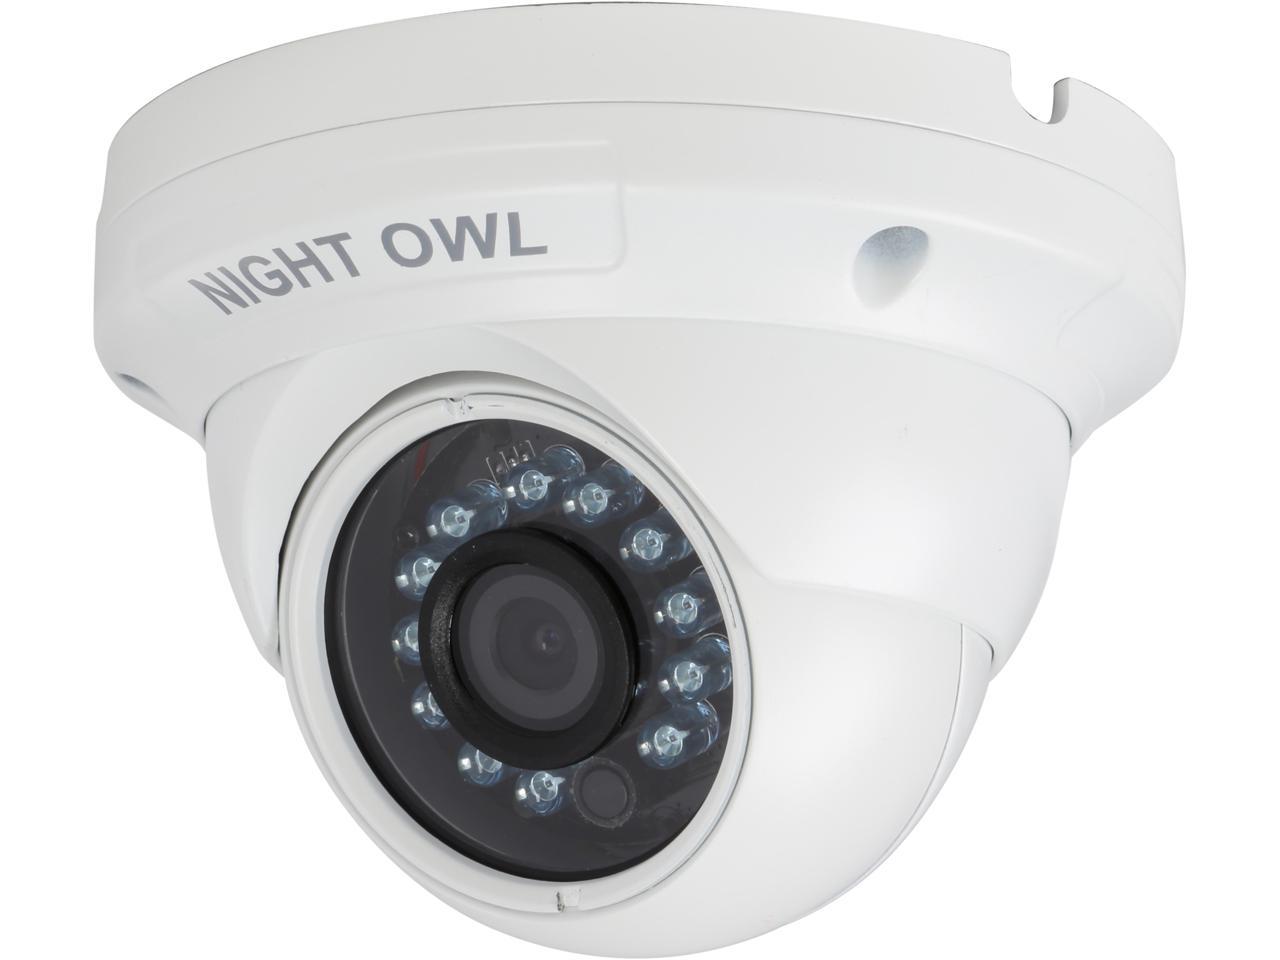 night owl cameras